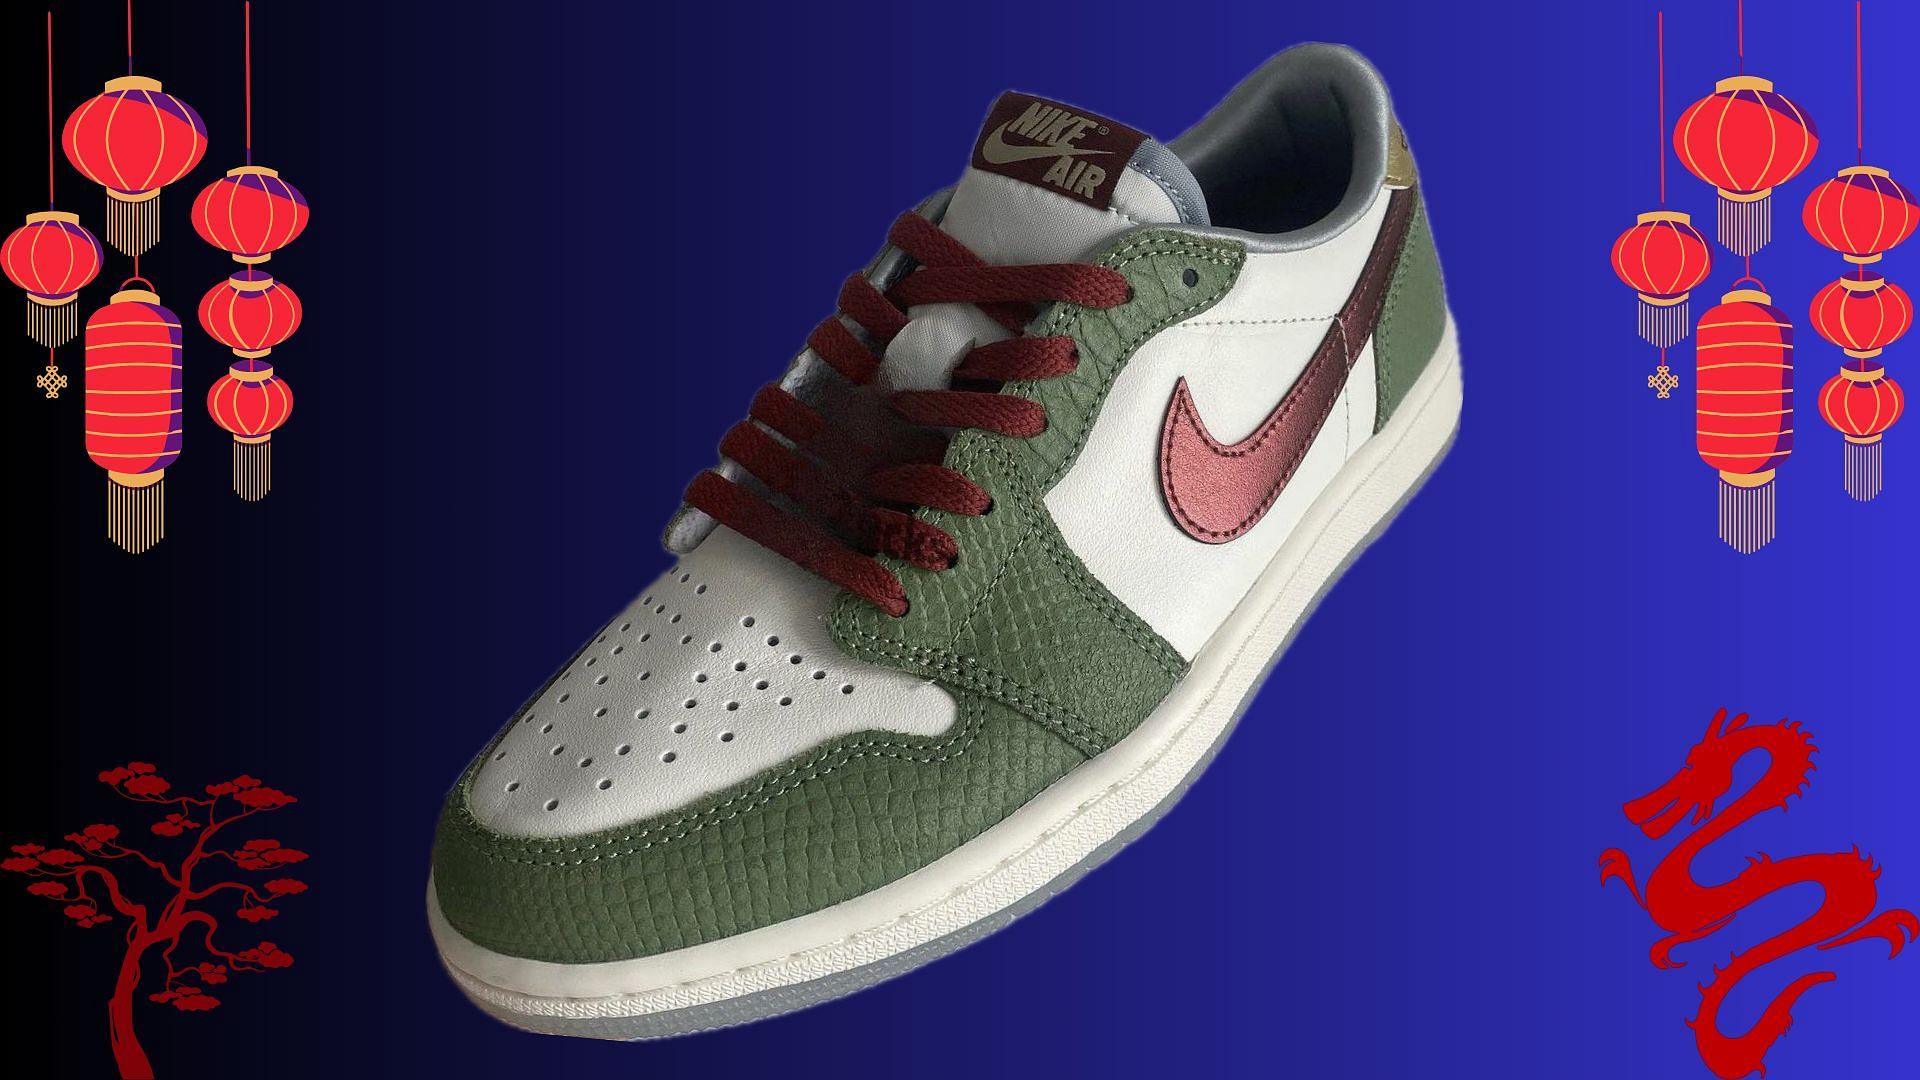 Nike Air Jordan 1 Low Year of the Dragon shoes (Image via Twitter/@astromagazine)